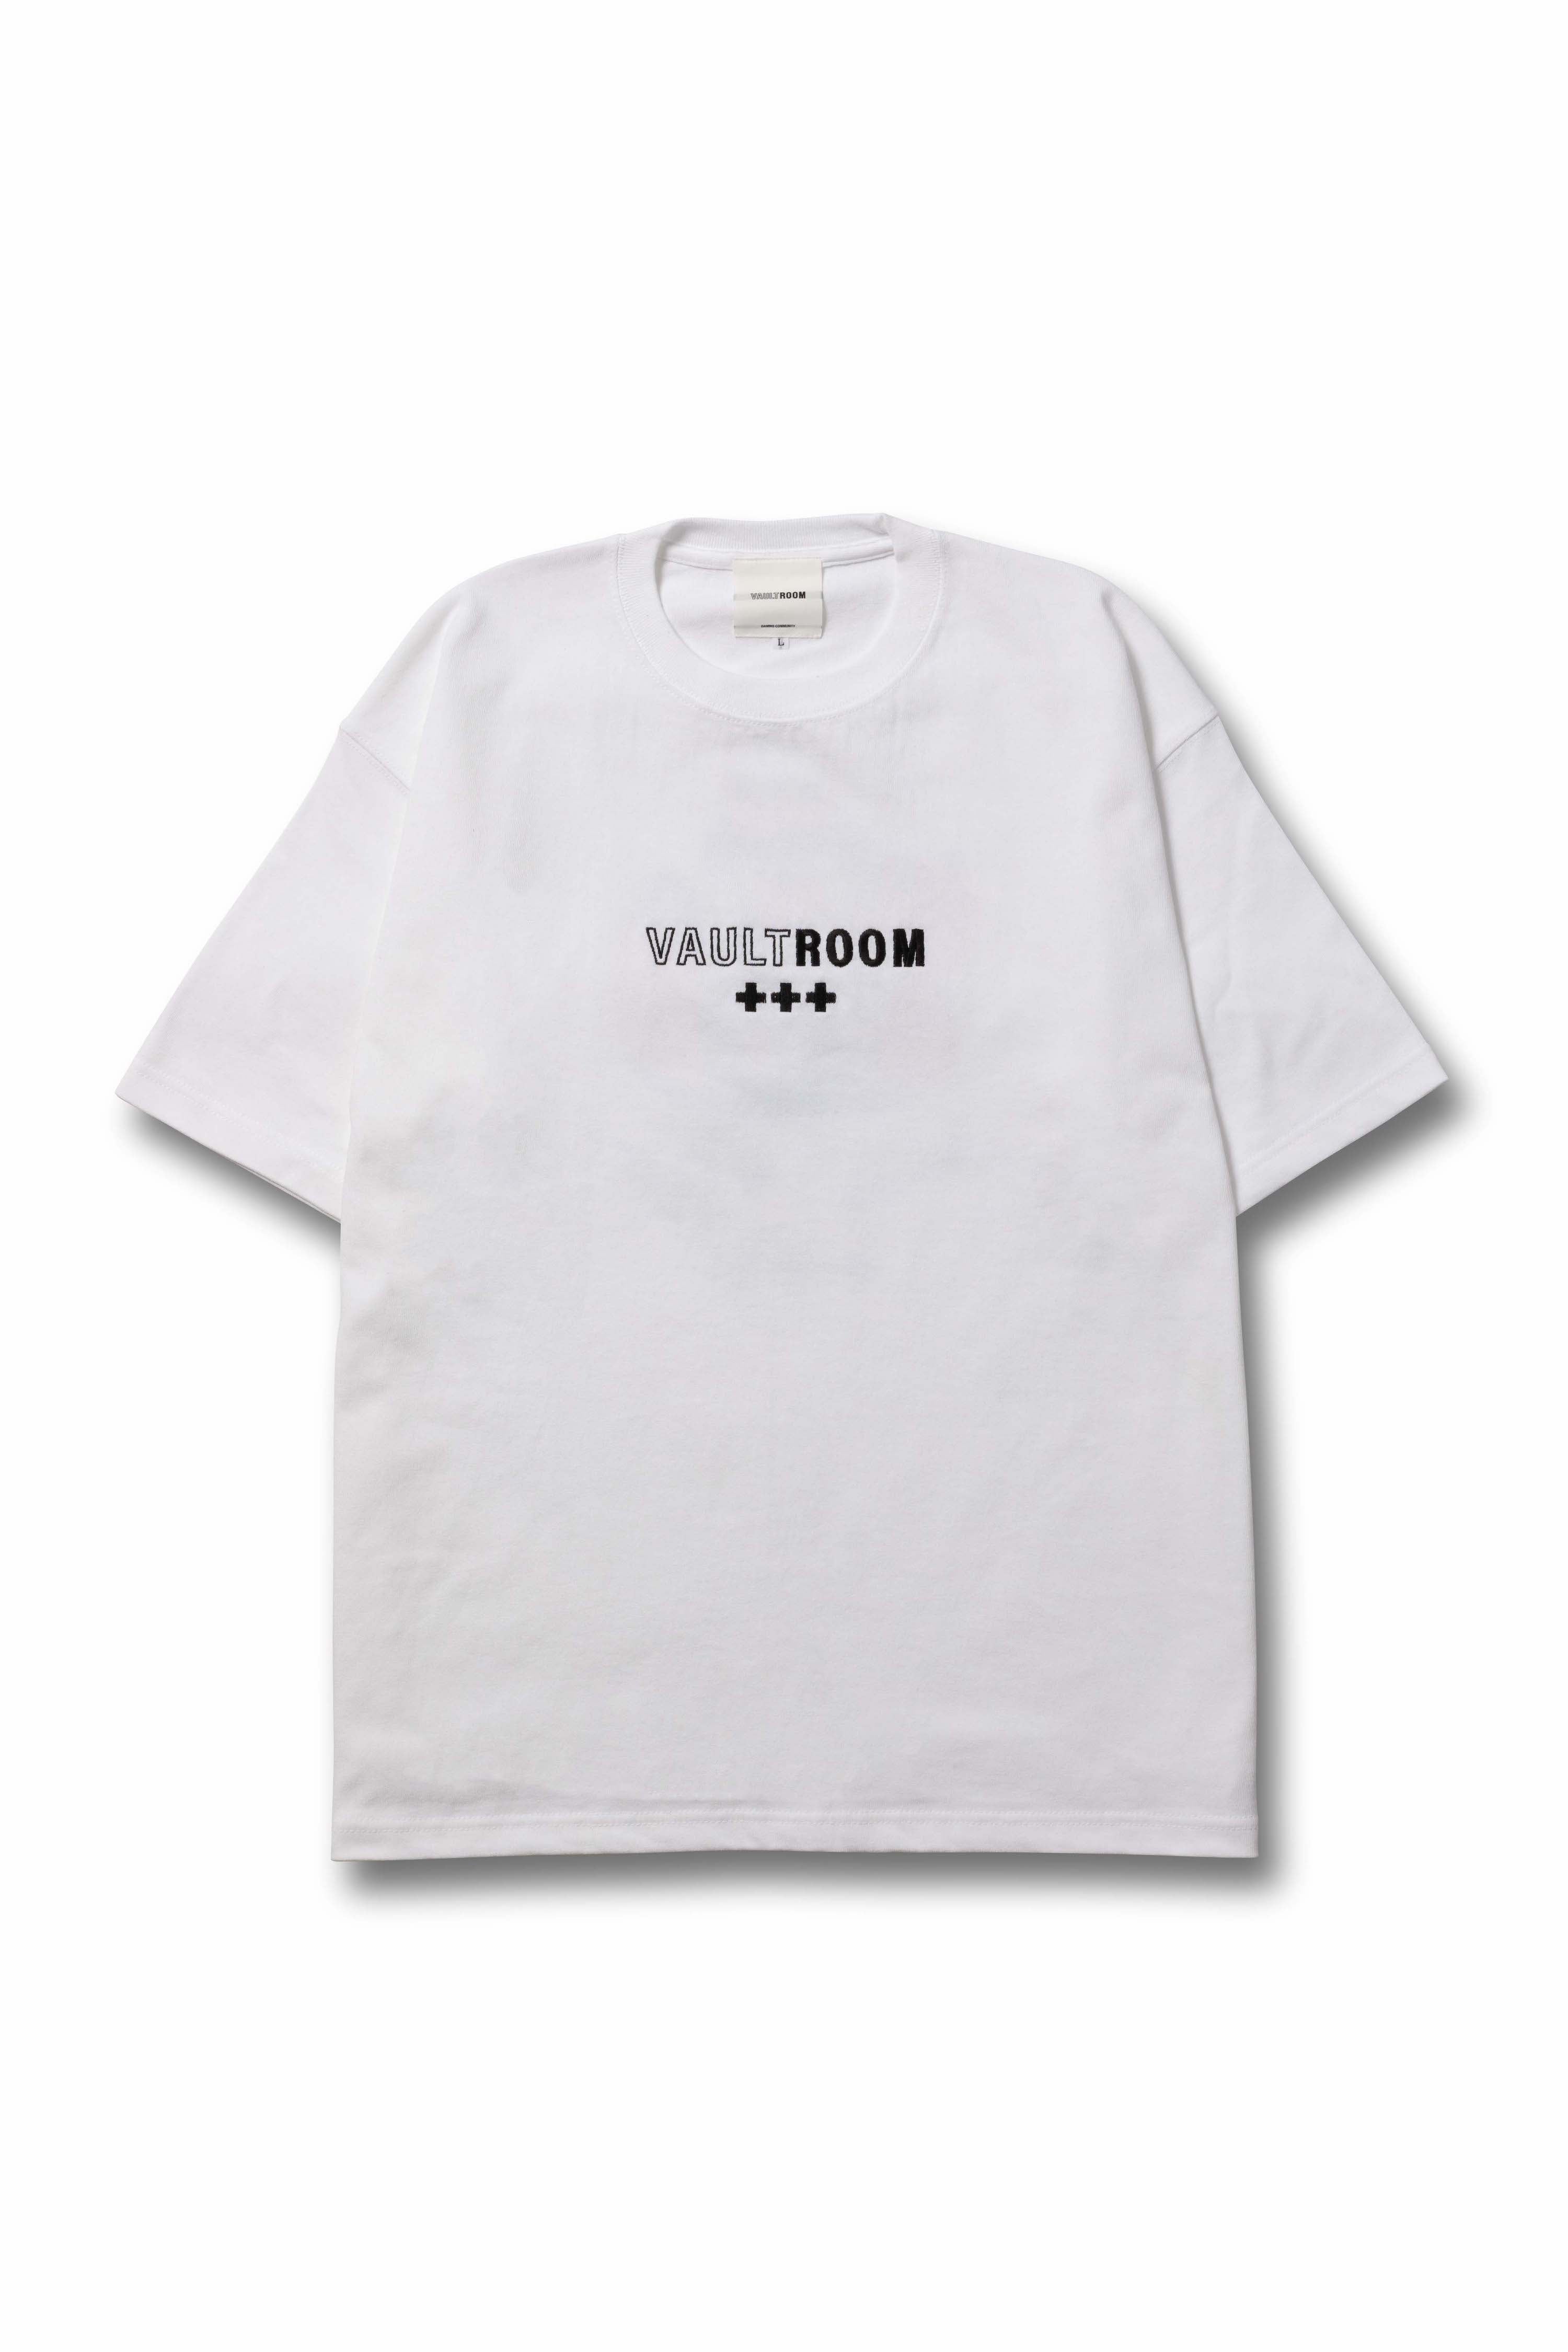 RECOIL TEE / WHT / VAULT ROOMTシャツ/カットソー(半袖/袖なし) - T 